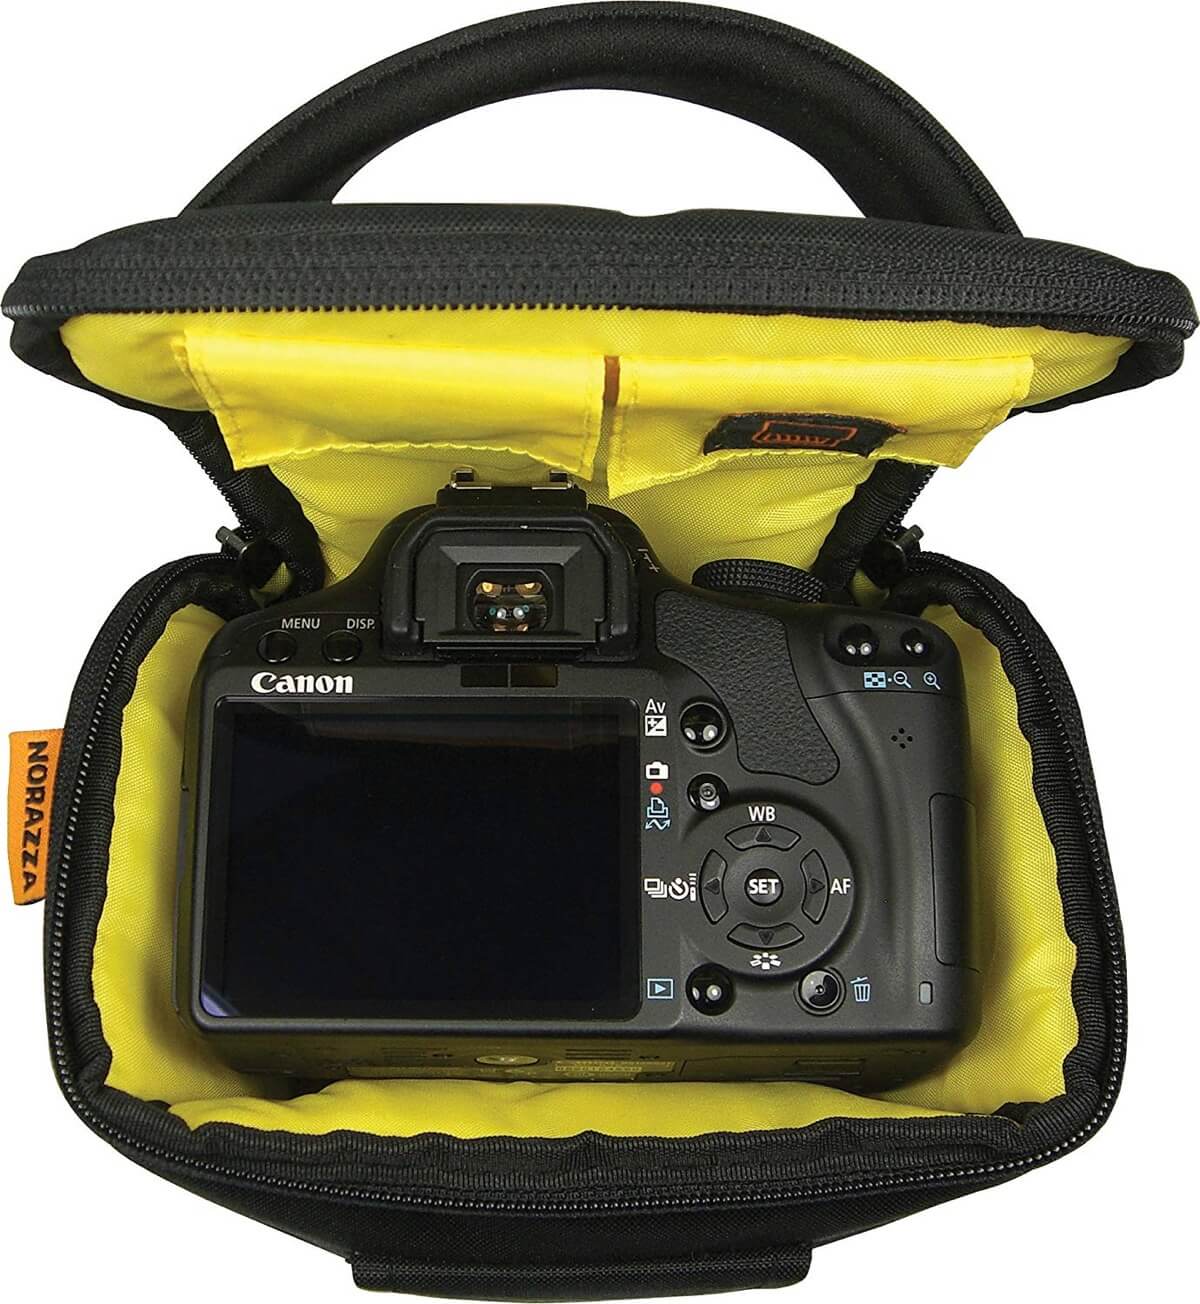 best compact camera bag